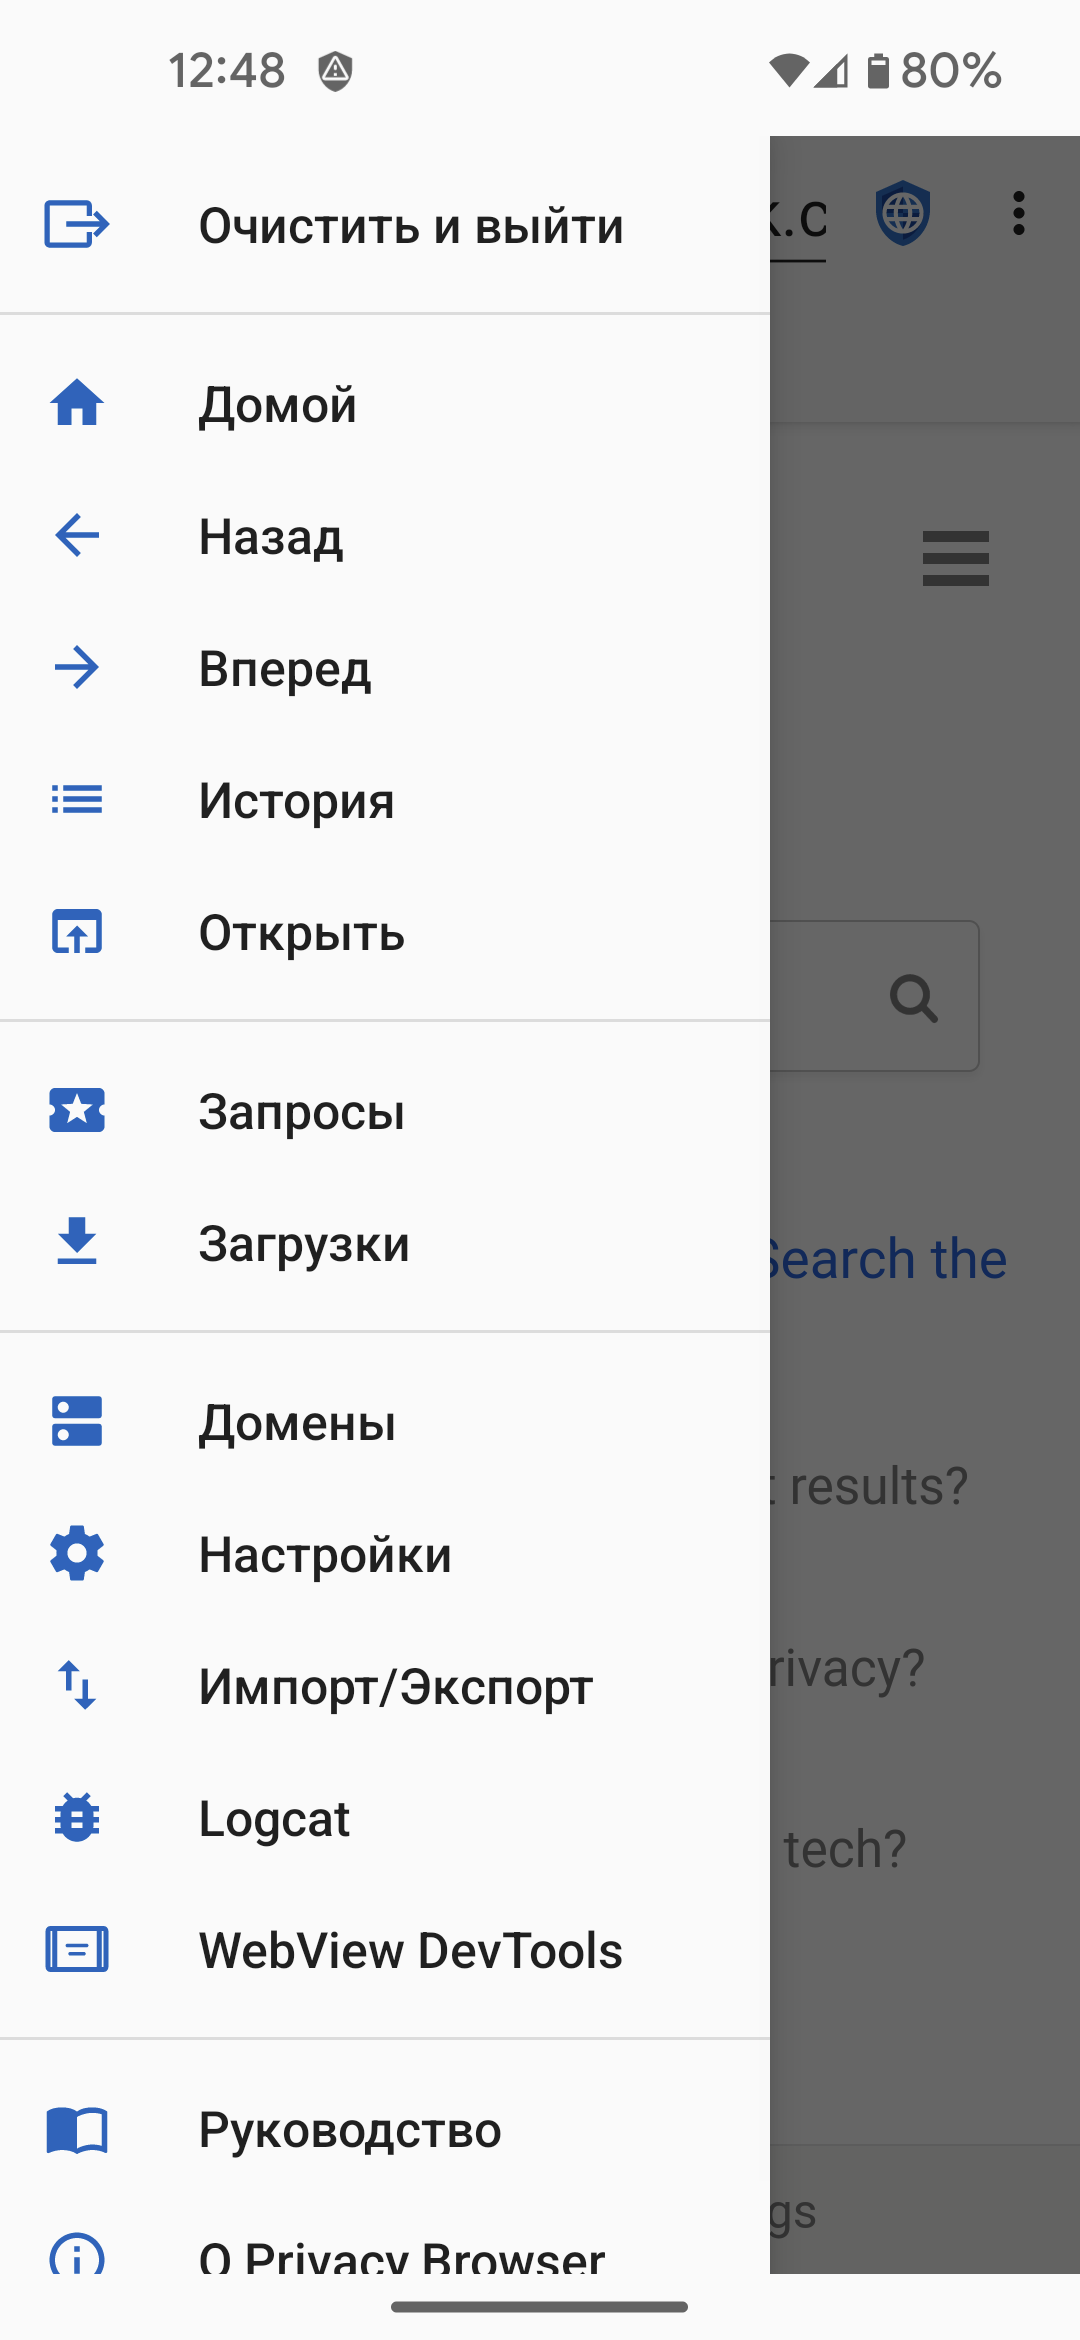 fastlane/metadata/android/ru-RU/images/phoneScreenshots/02-NavigationMenu.png